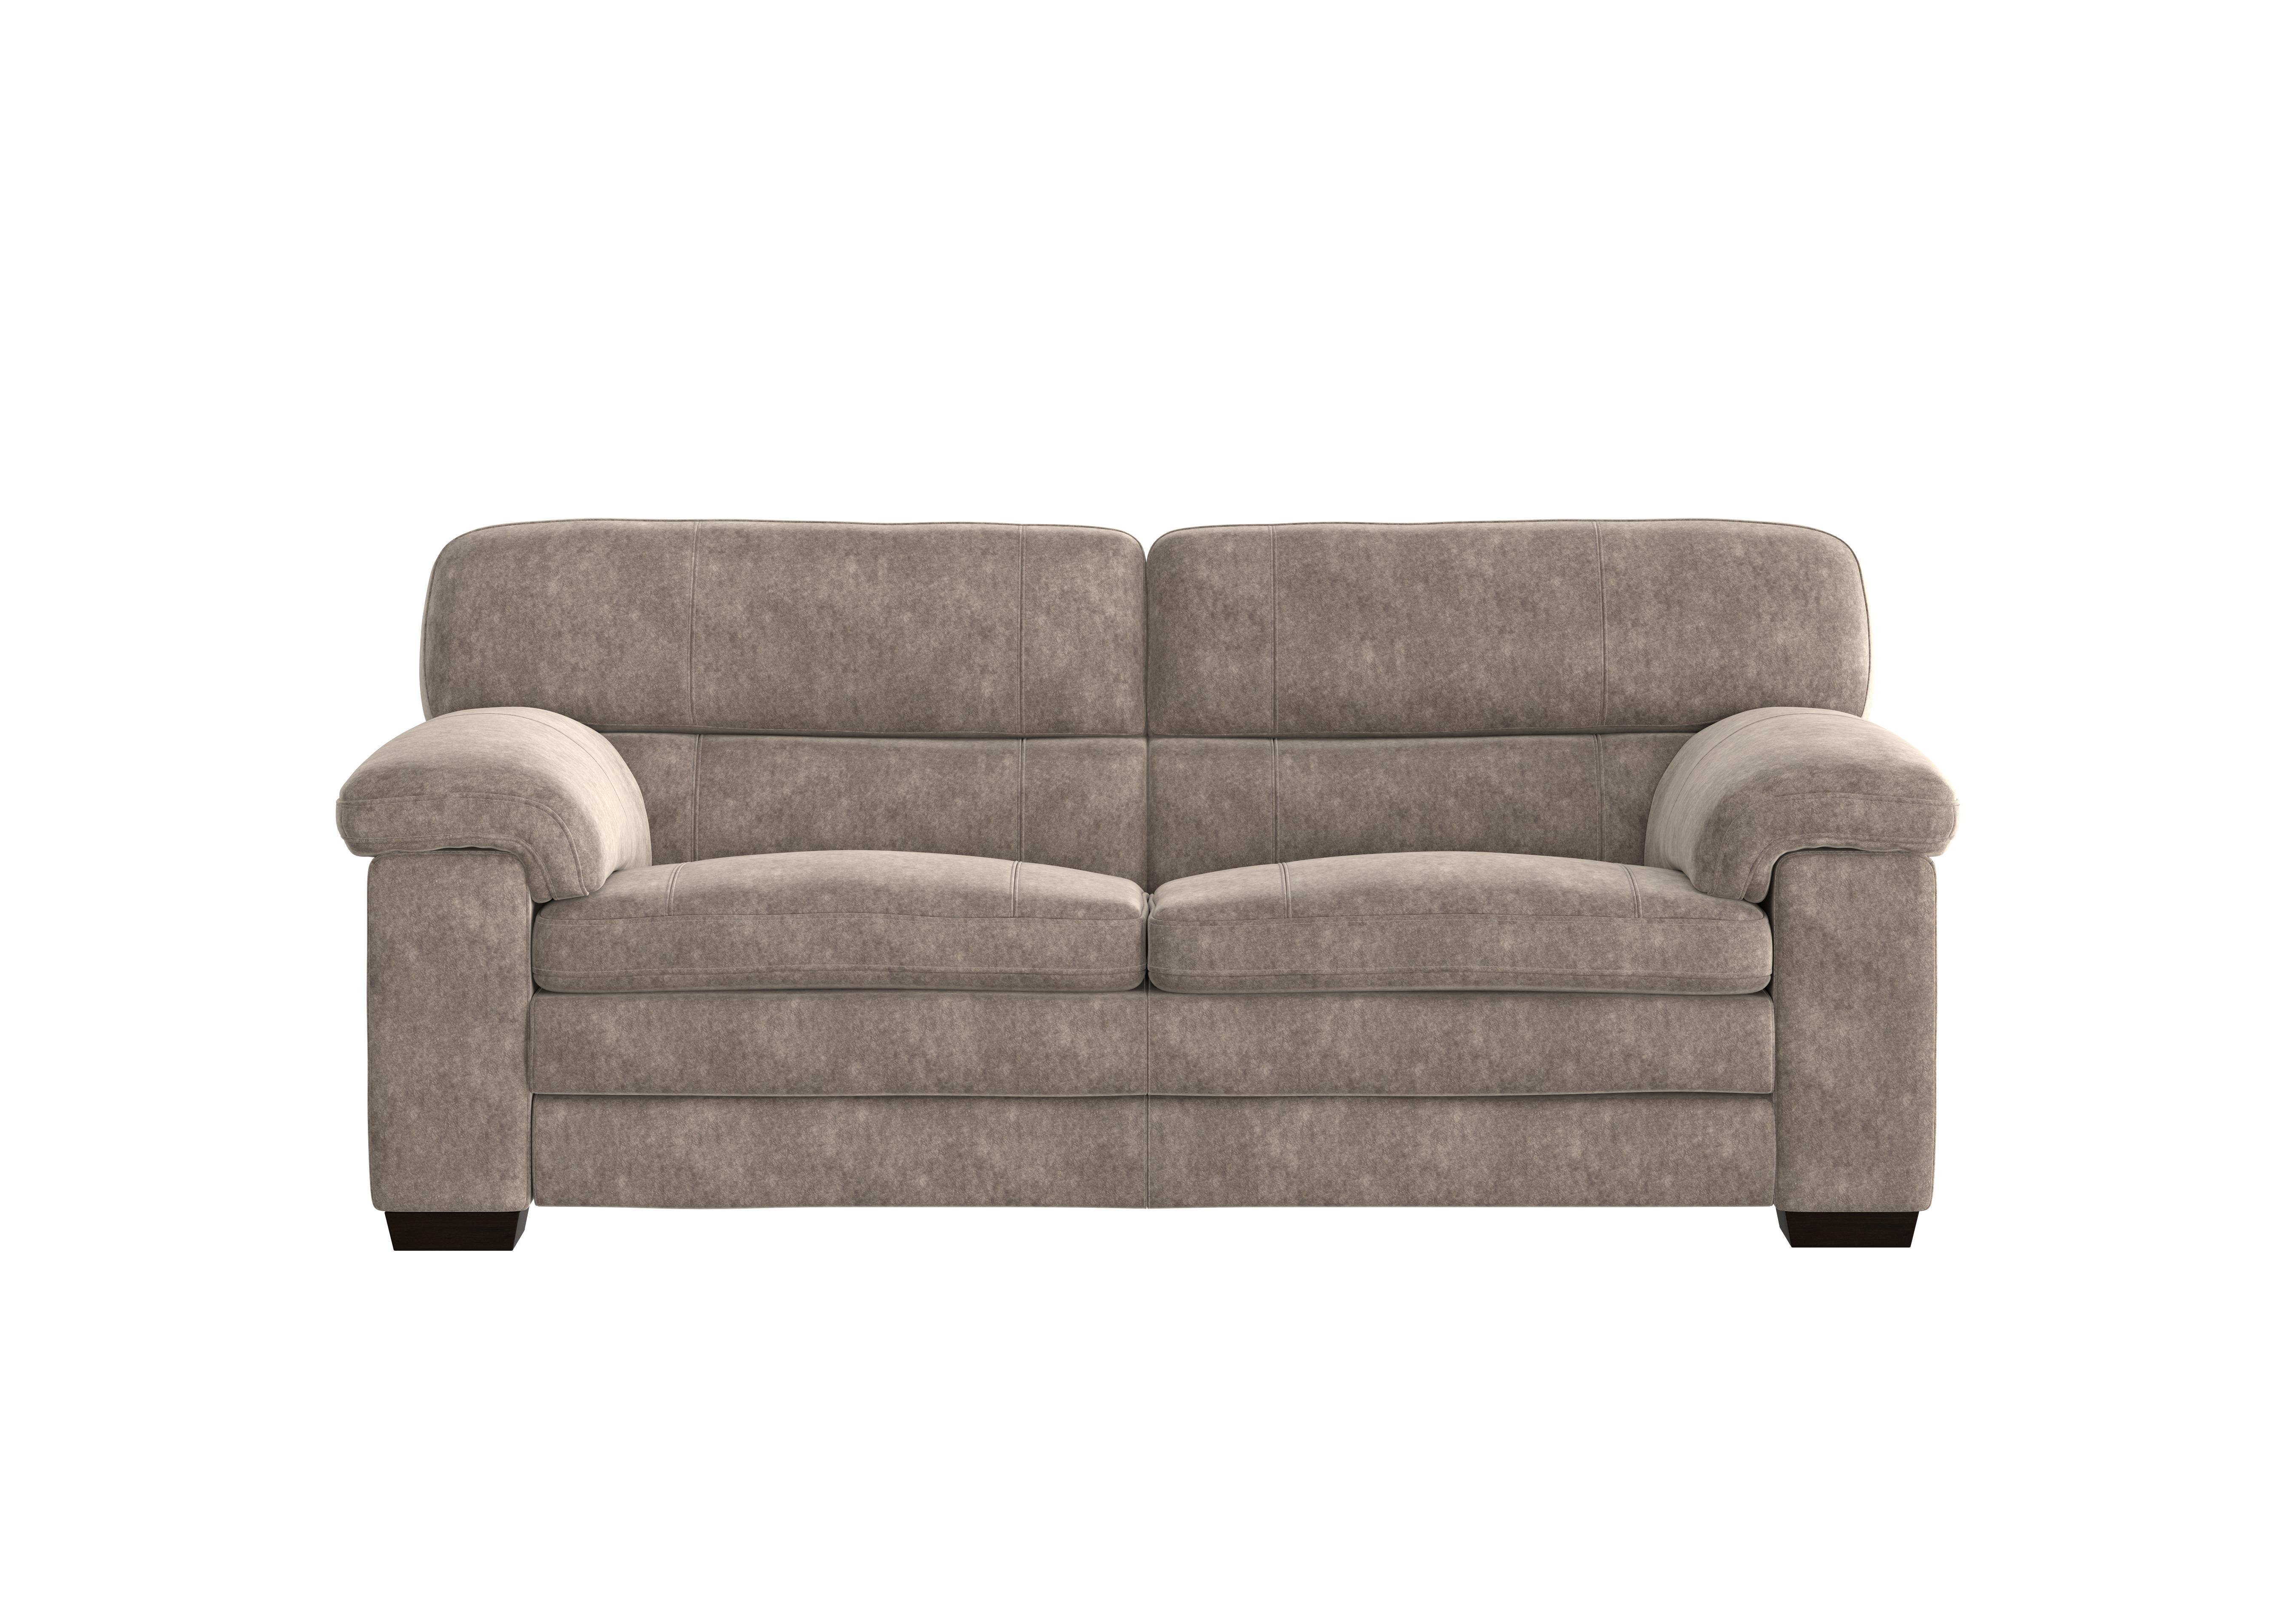 Cozee Fabric 2.5 Seater Sofa in Bfa-Bnn-R29 Fv1 Mink on Furniture Village